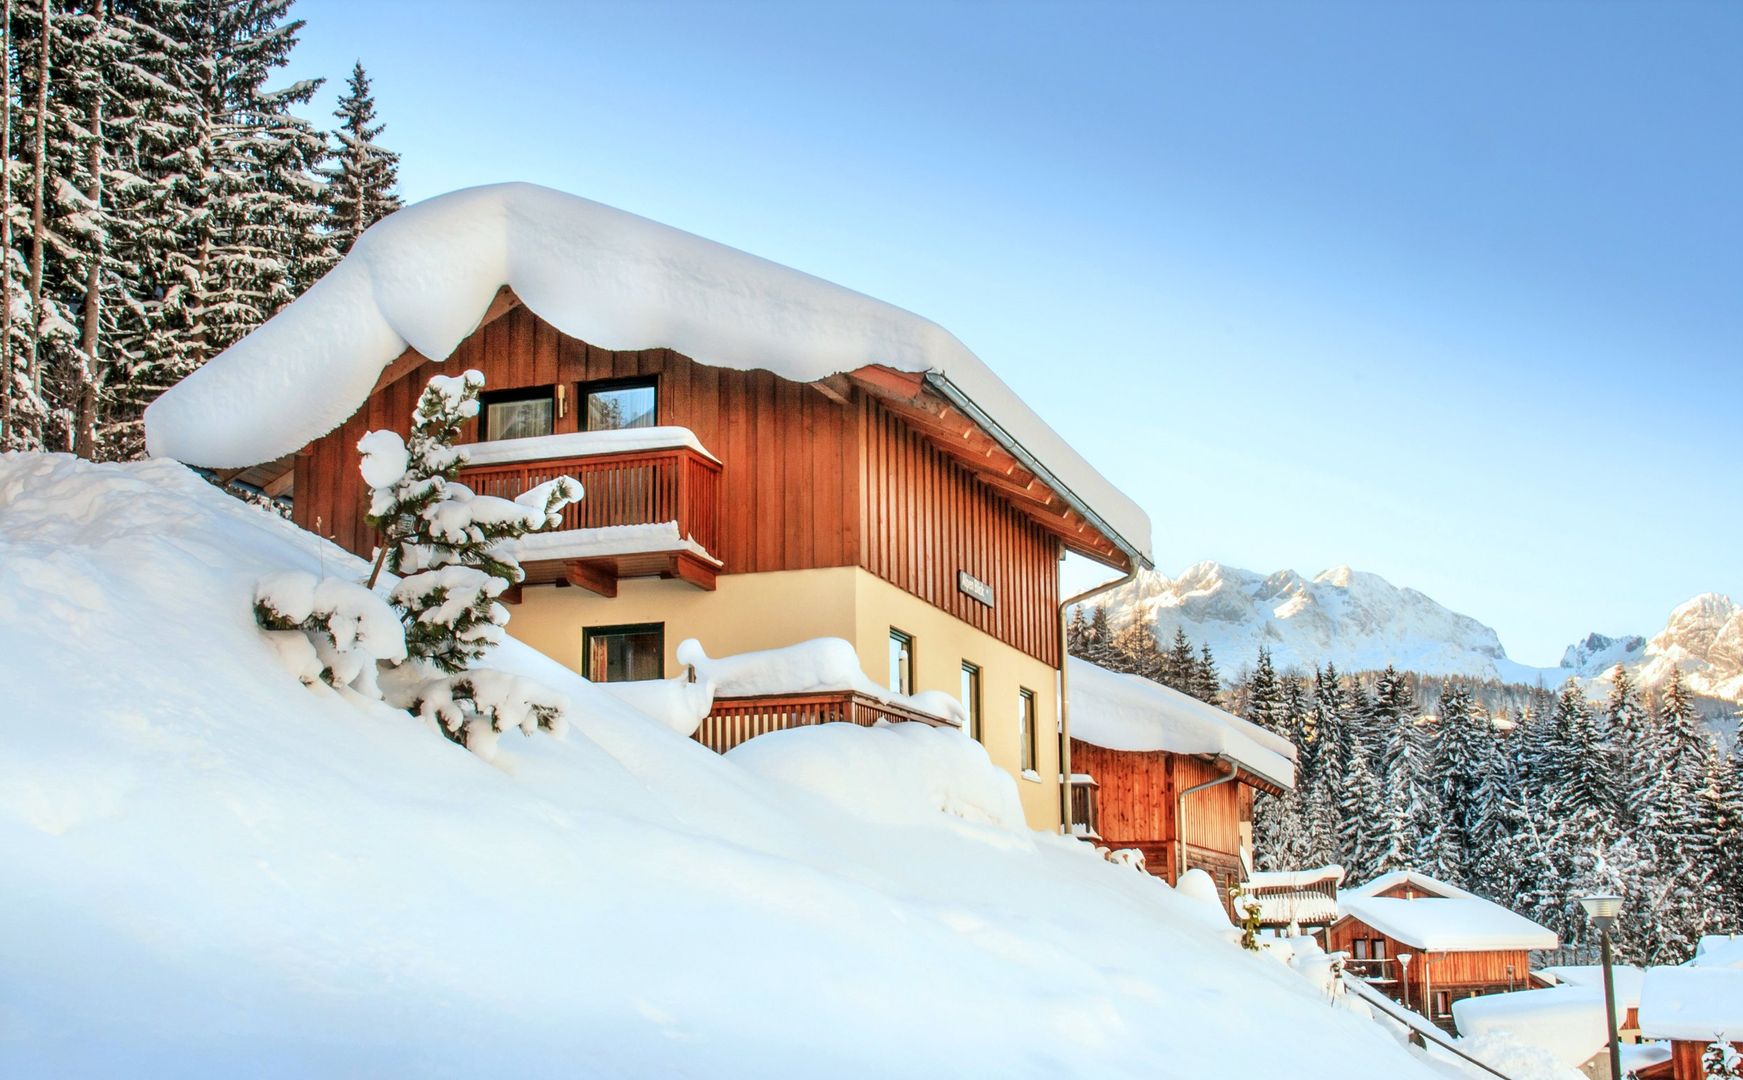 Meer info over Alpendorf DachsteinWest  bij Wintertrex